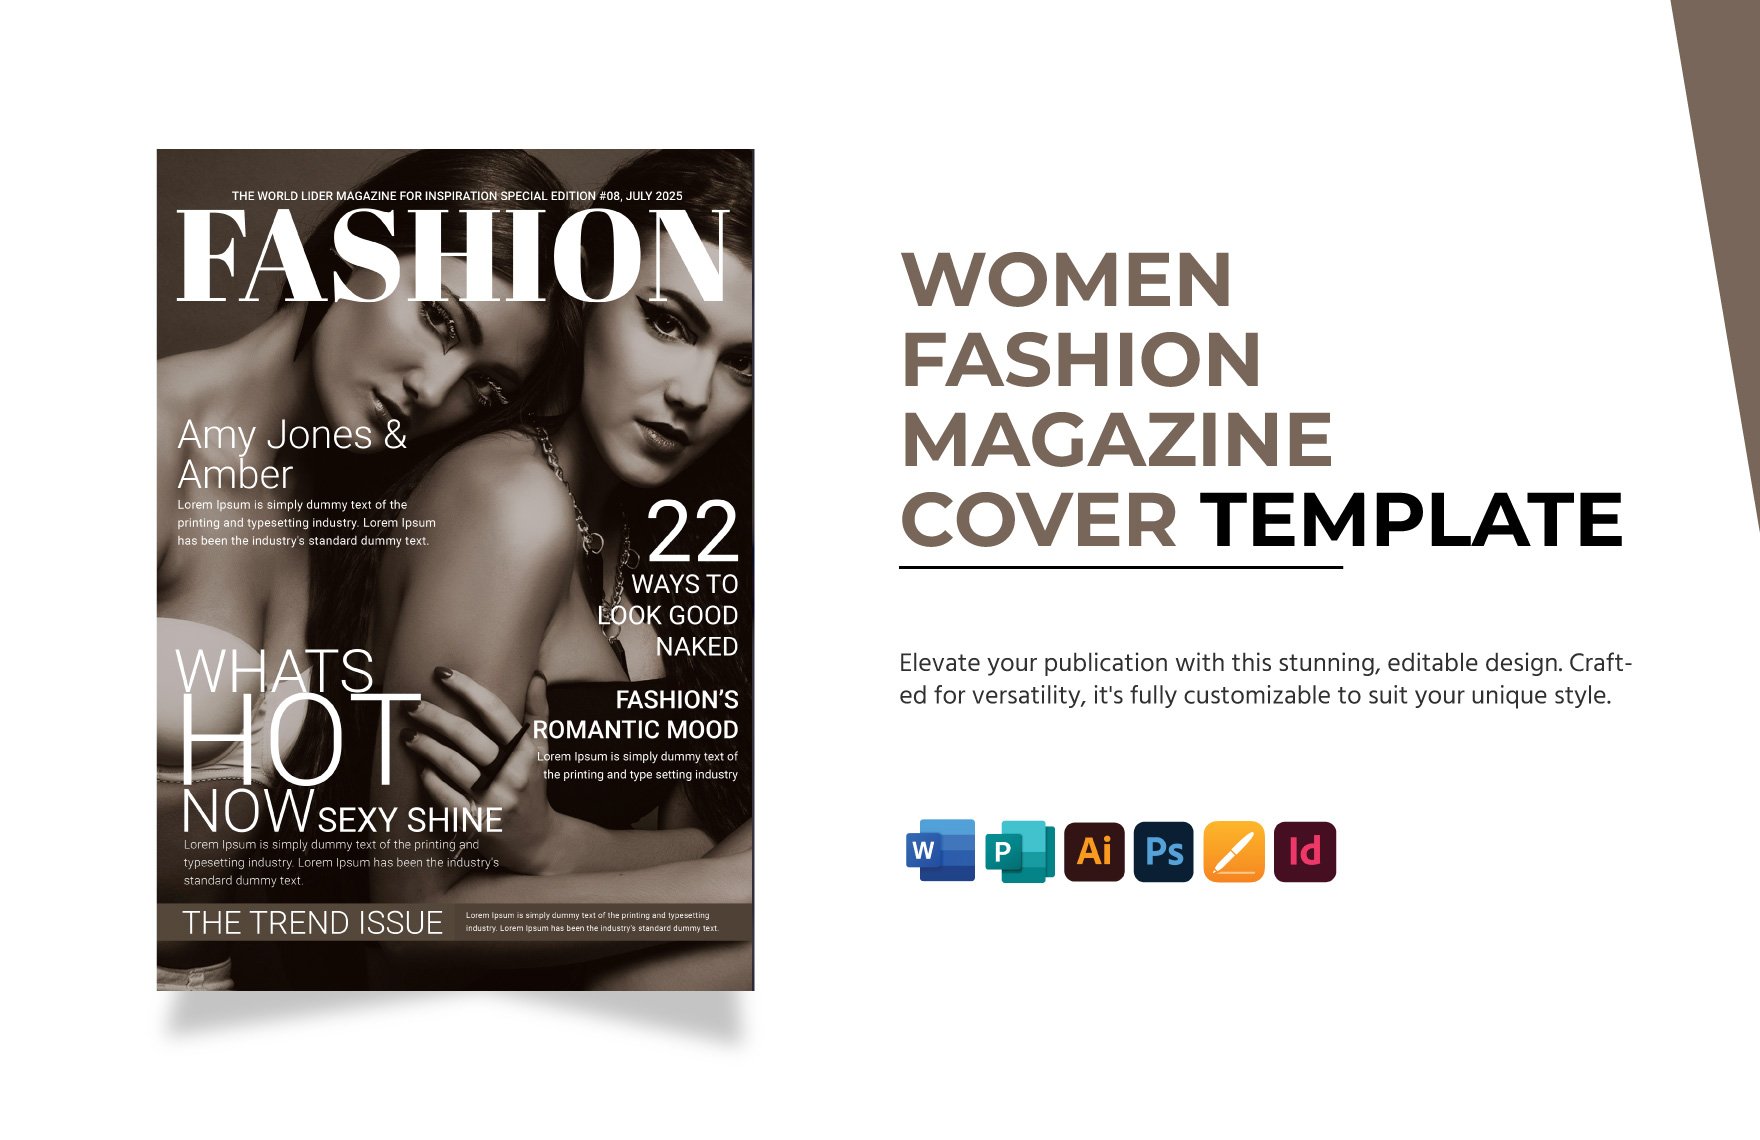 Women Fashion Magazine Cover Template